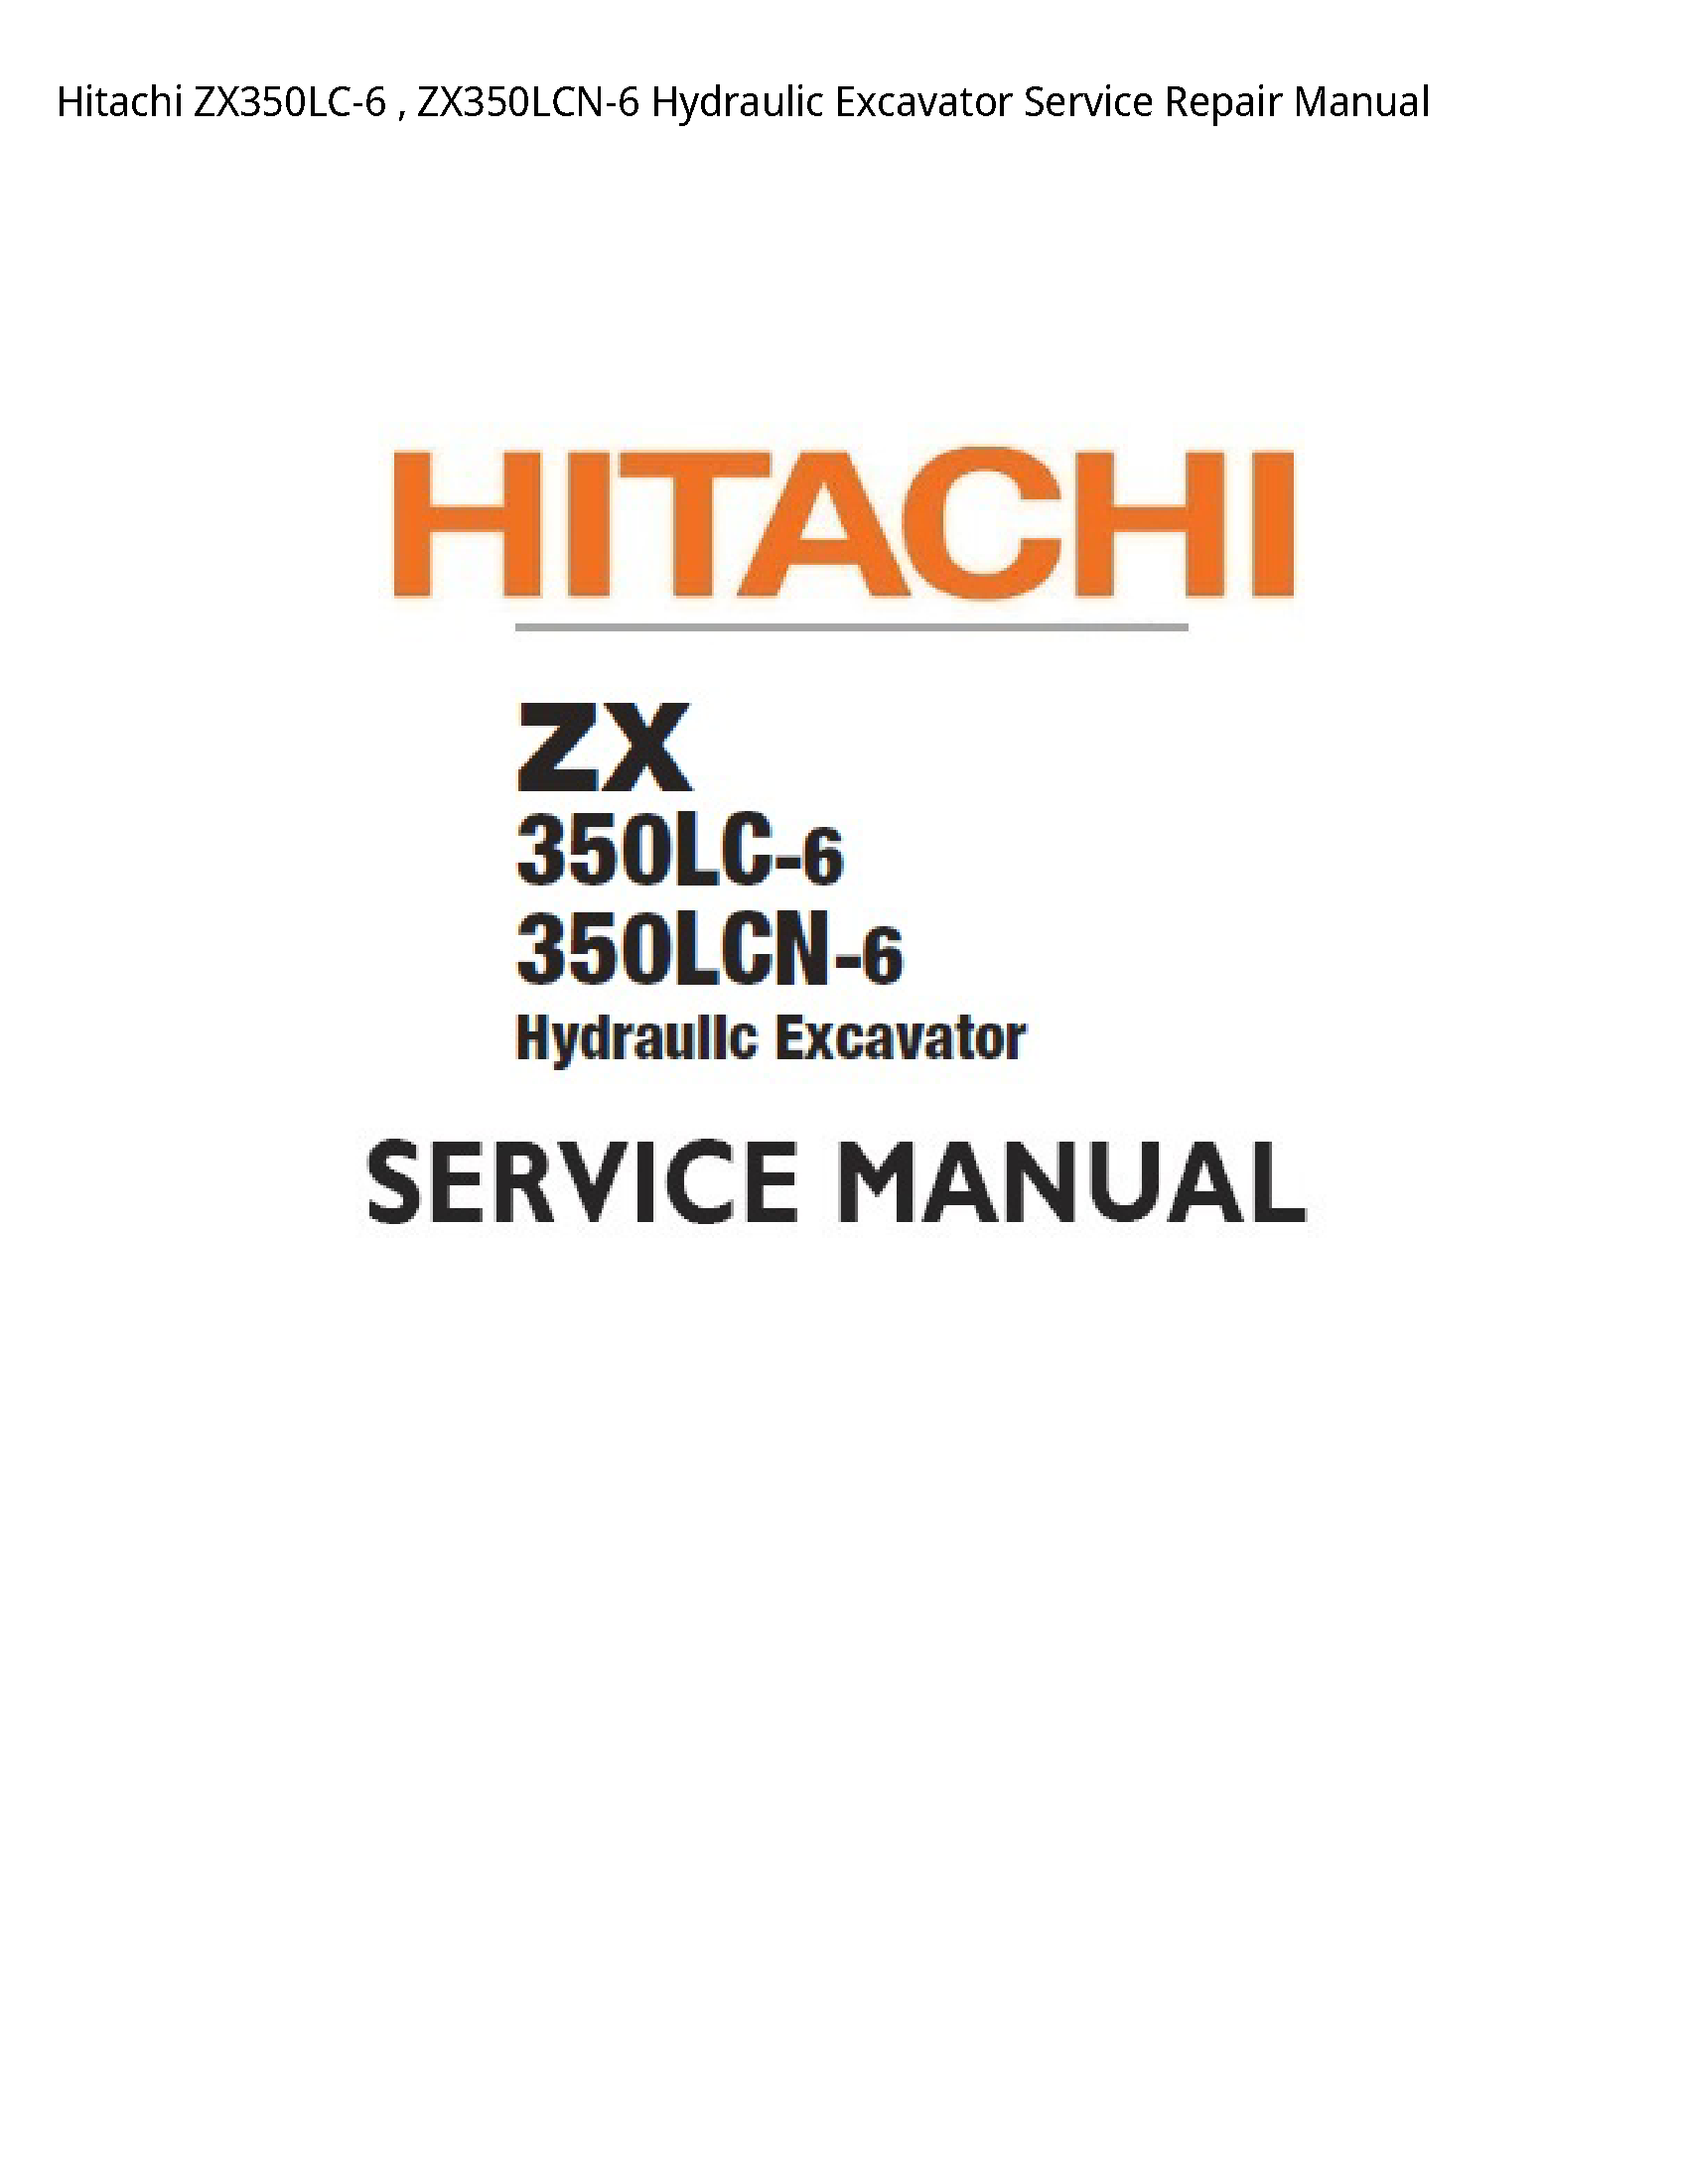 Hitachi ZX350LC-6 Hydraulic Excavator manual